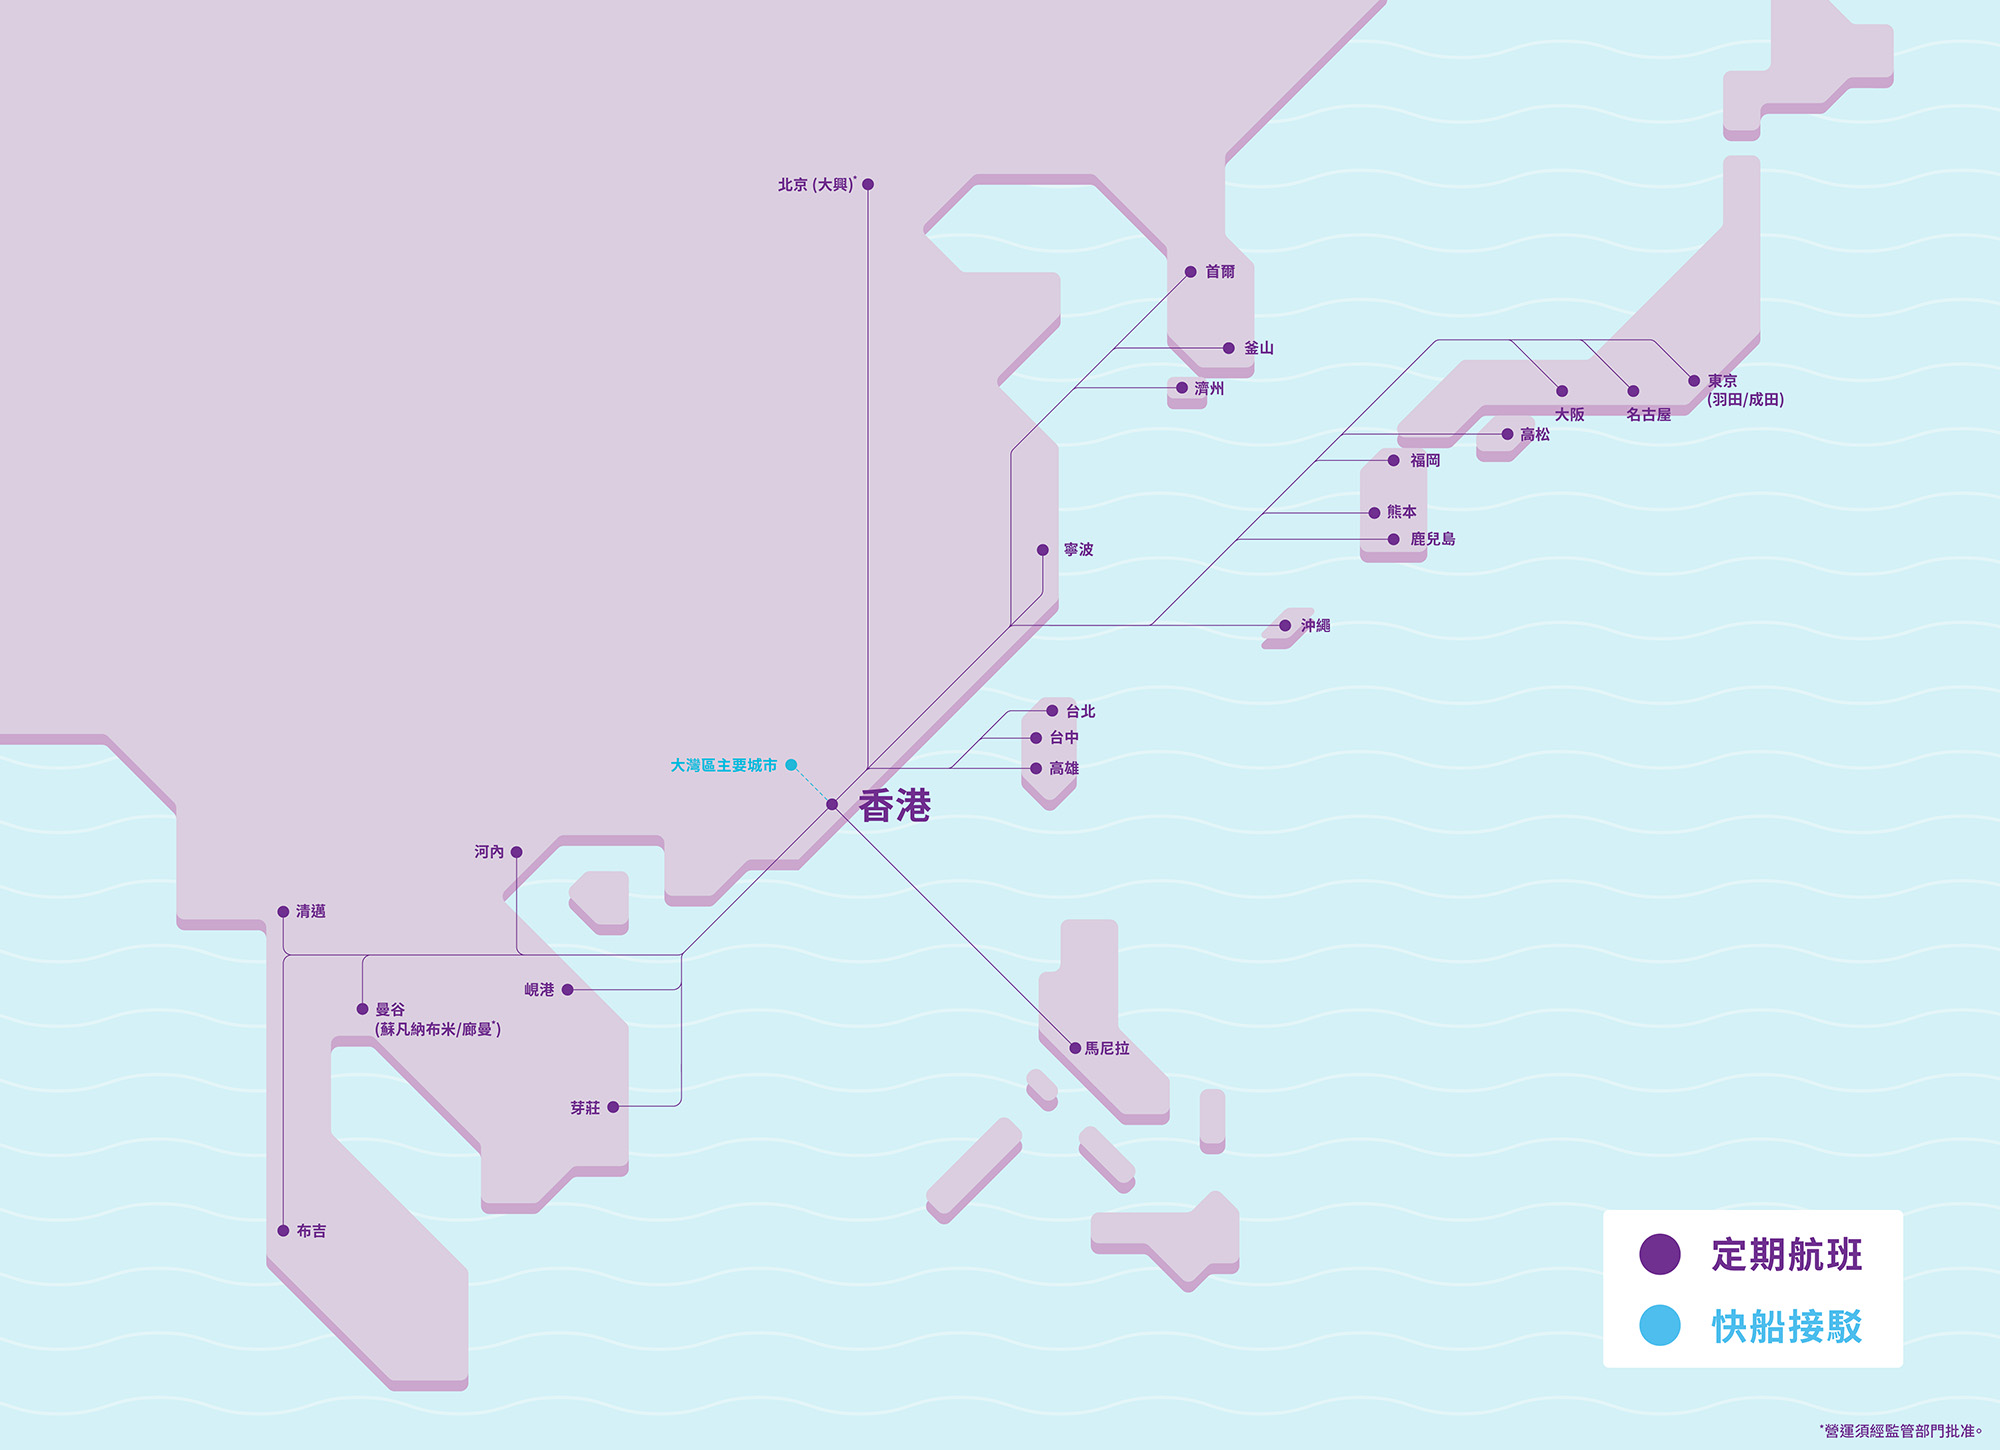 HK Express 航線圖